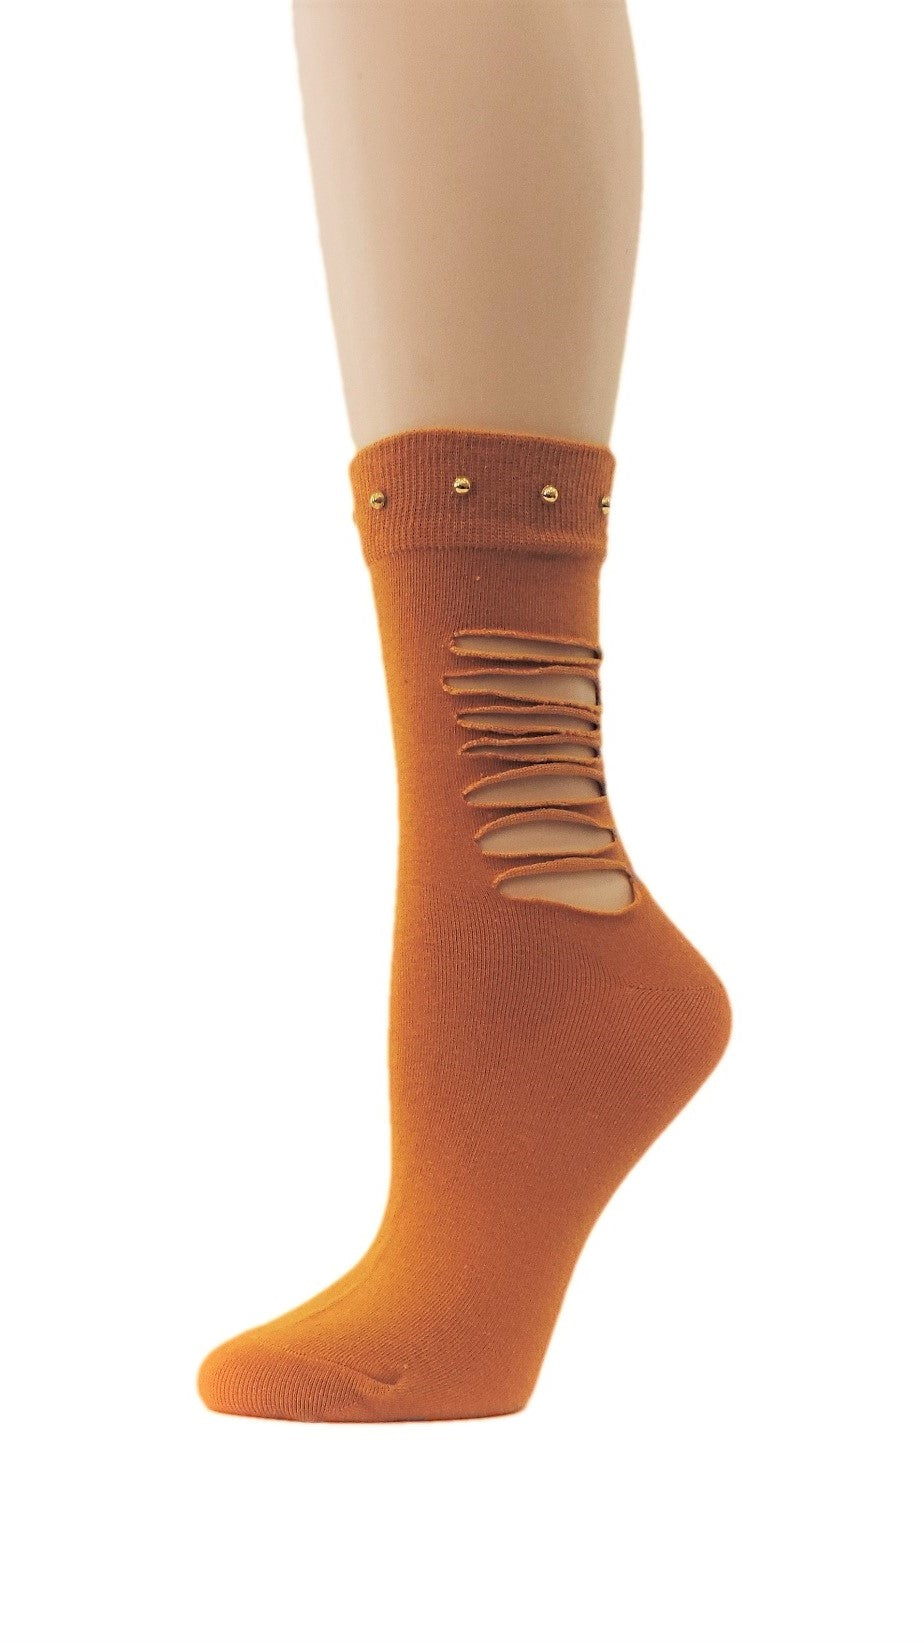 Ripped Mustard Custom Fashion Socks with beads - Global Trendz Fashion®